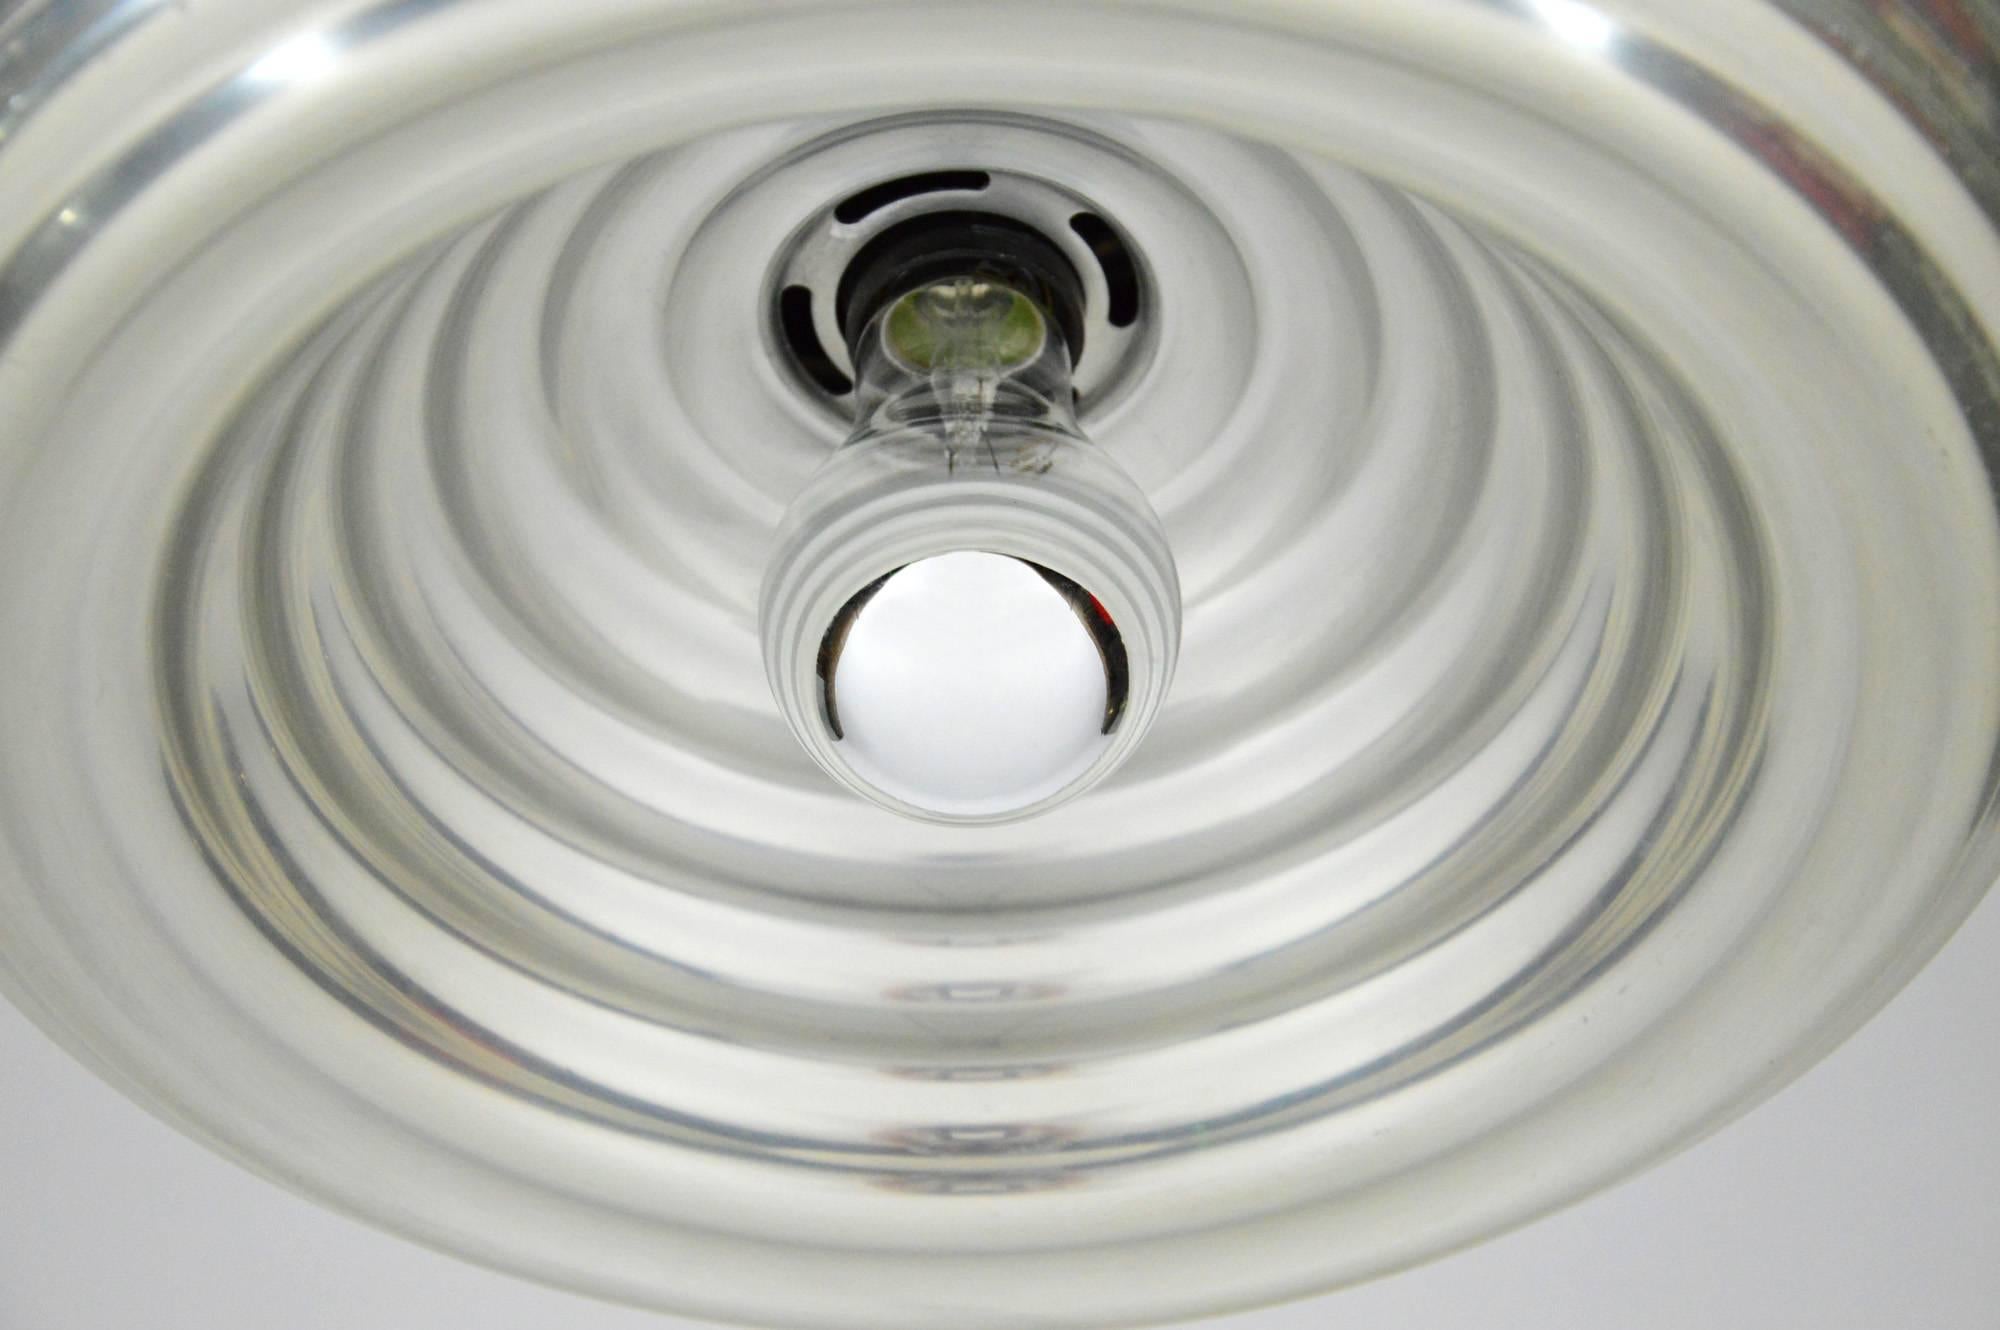 Aluminum Flos Splügen Bräu Pendant Lamp with Counterweight by A. and P. G. Castiglioni